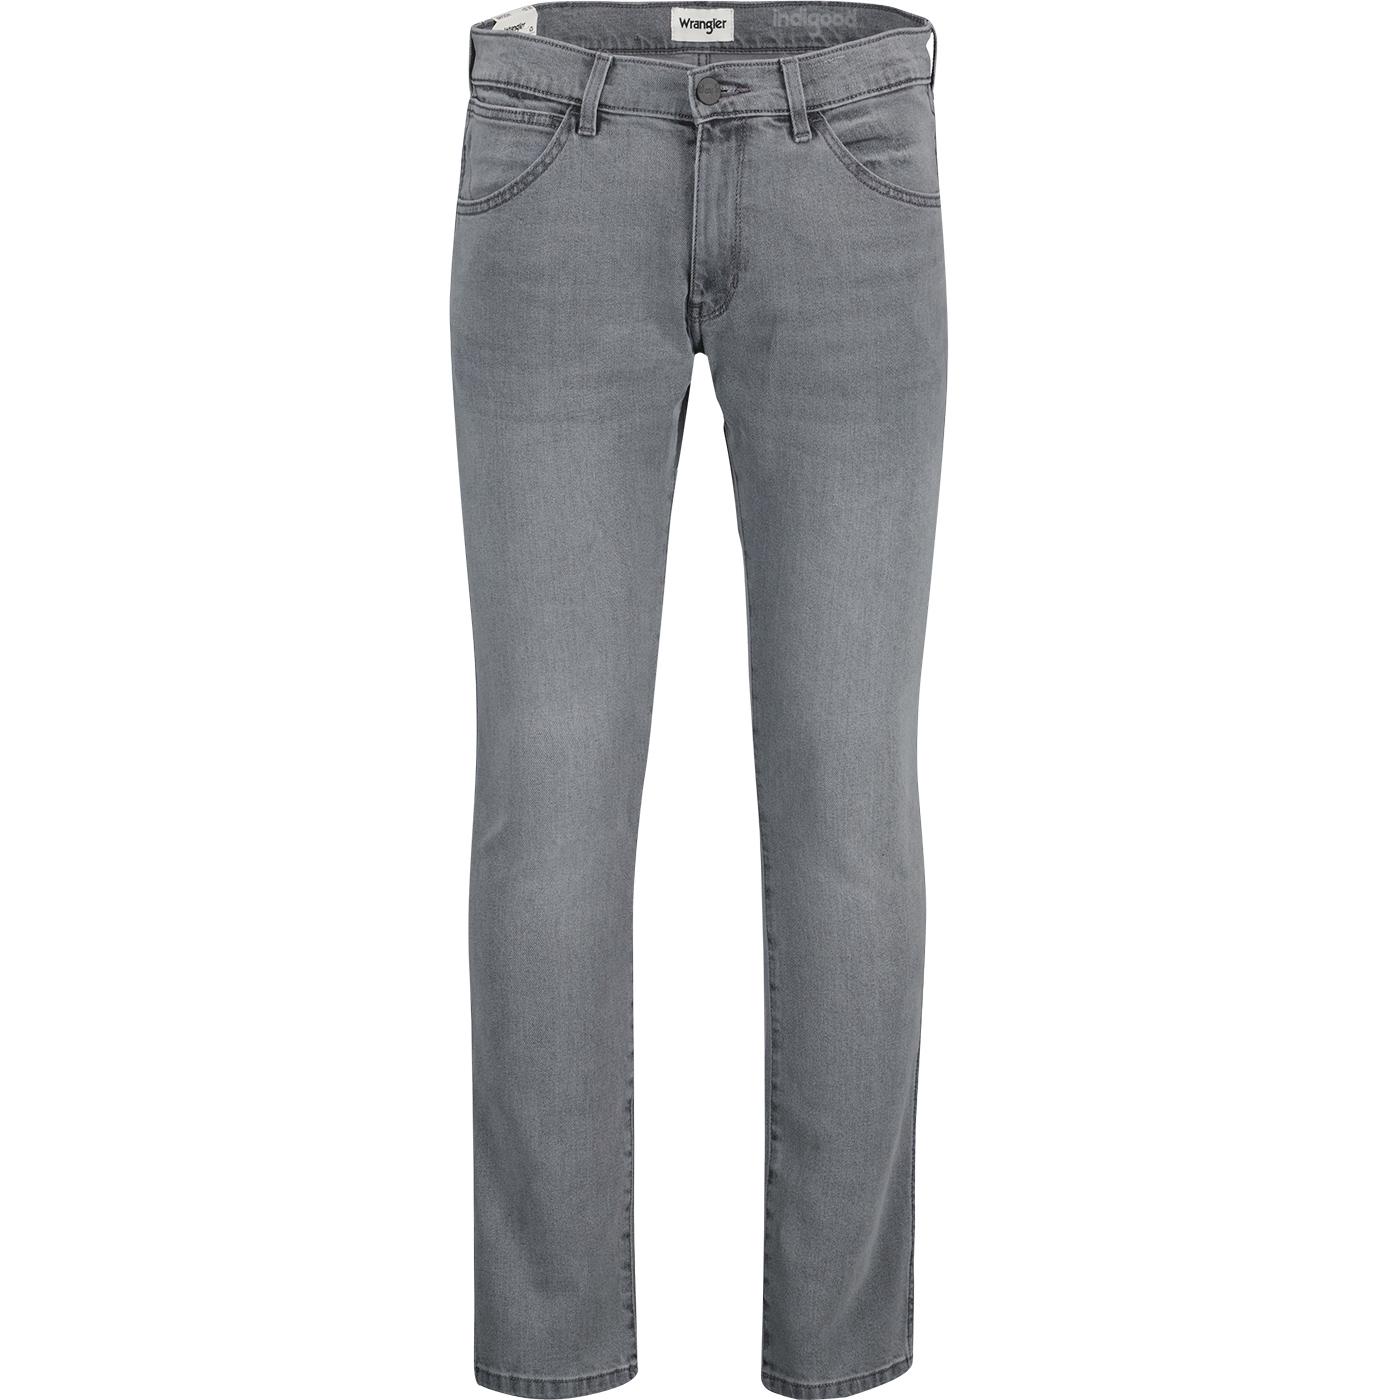 Bryson WRANGLER Retro Skinny Jeans (Golden Grey)